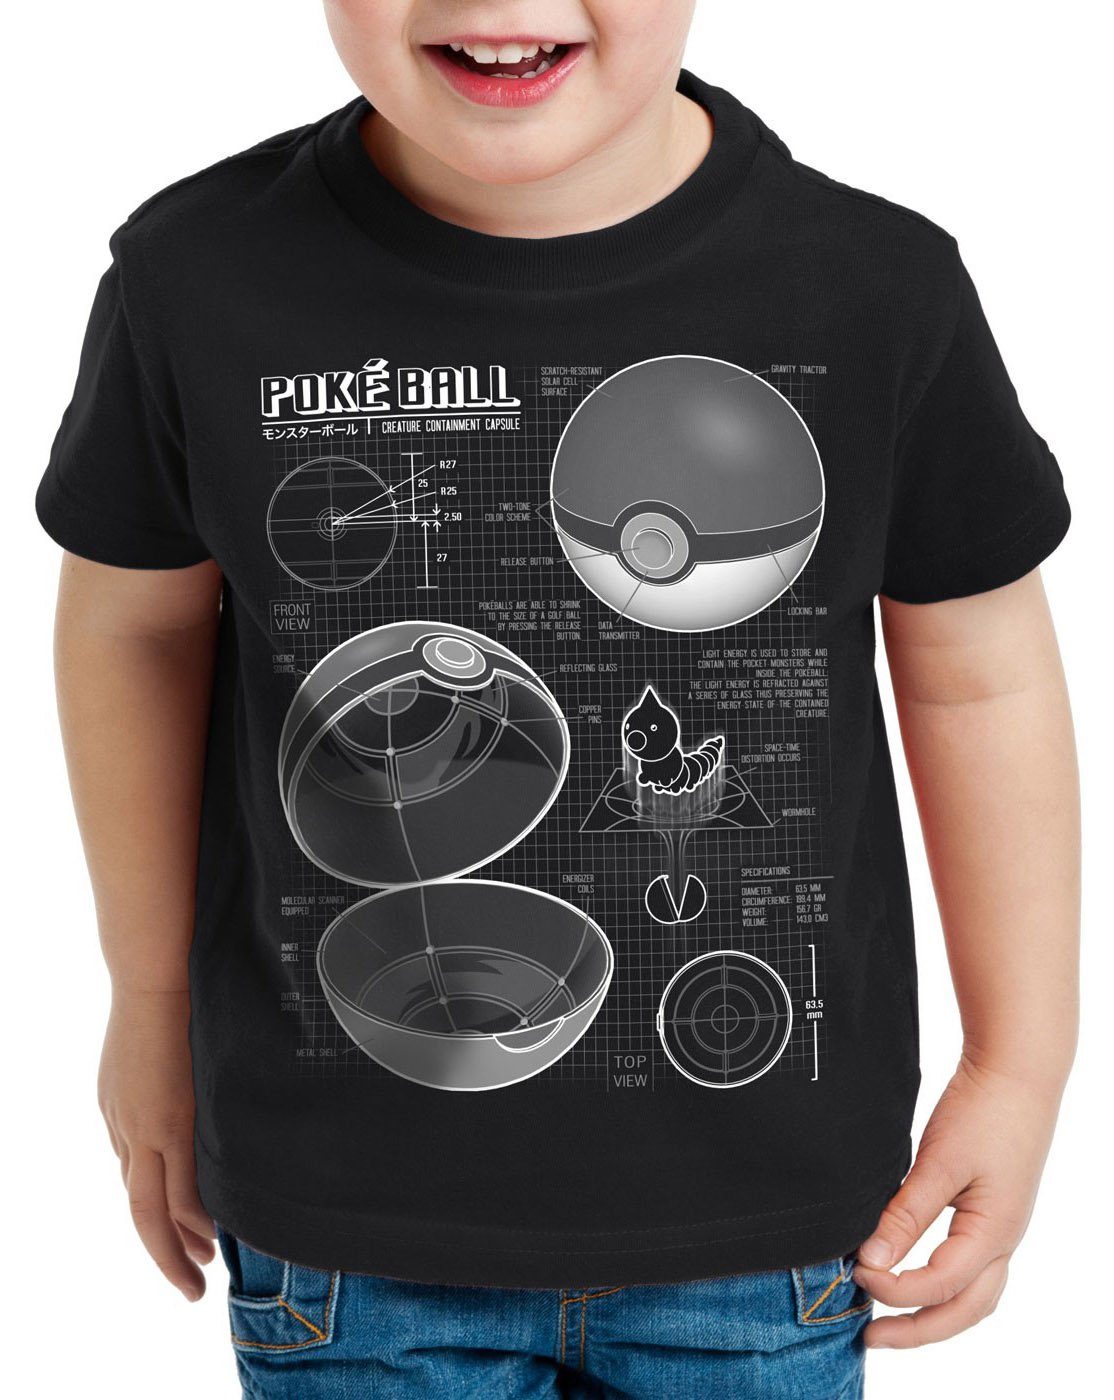 style3 Print-Shirt Kinder T-Shirt Pokéball Blaupause monster spiel online schwarz